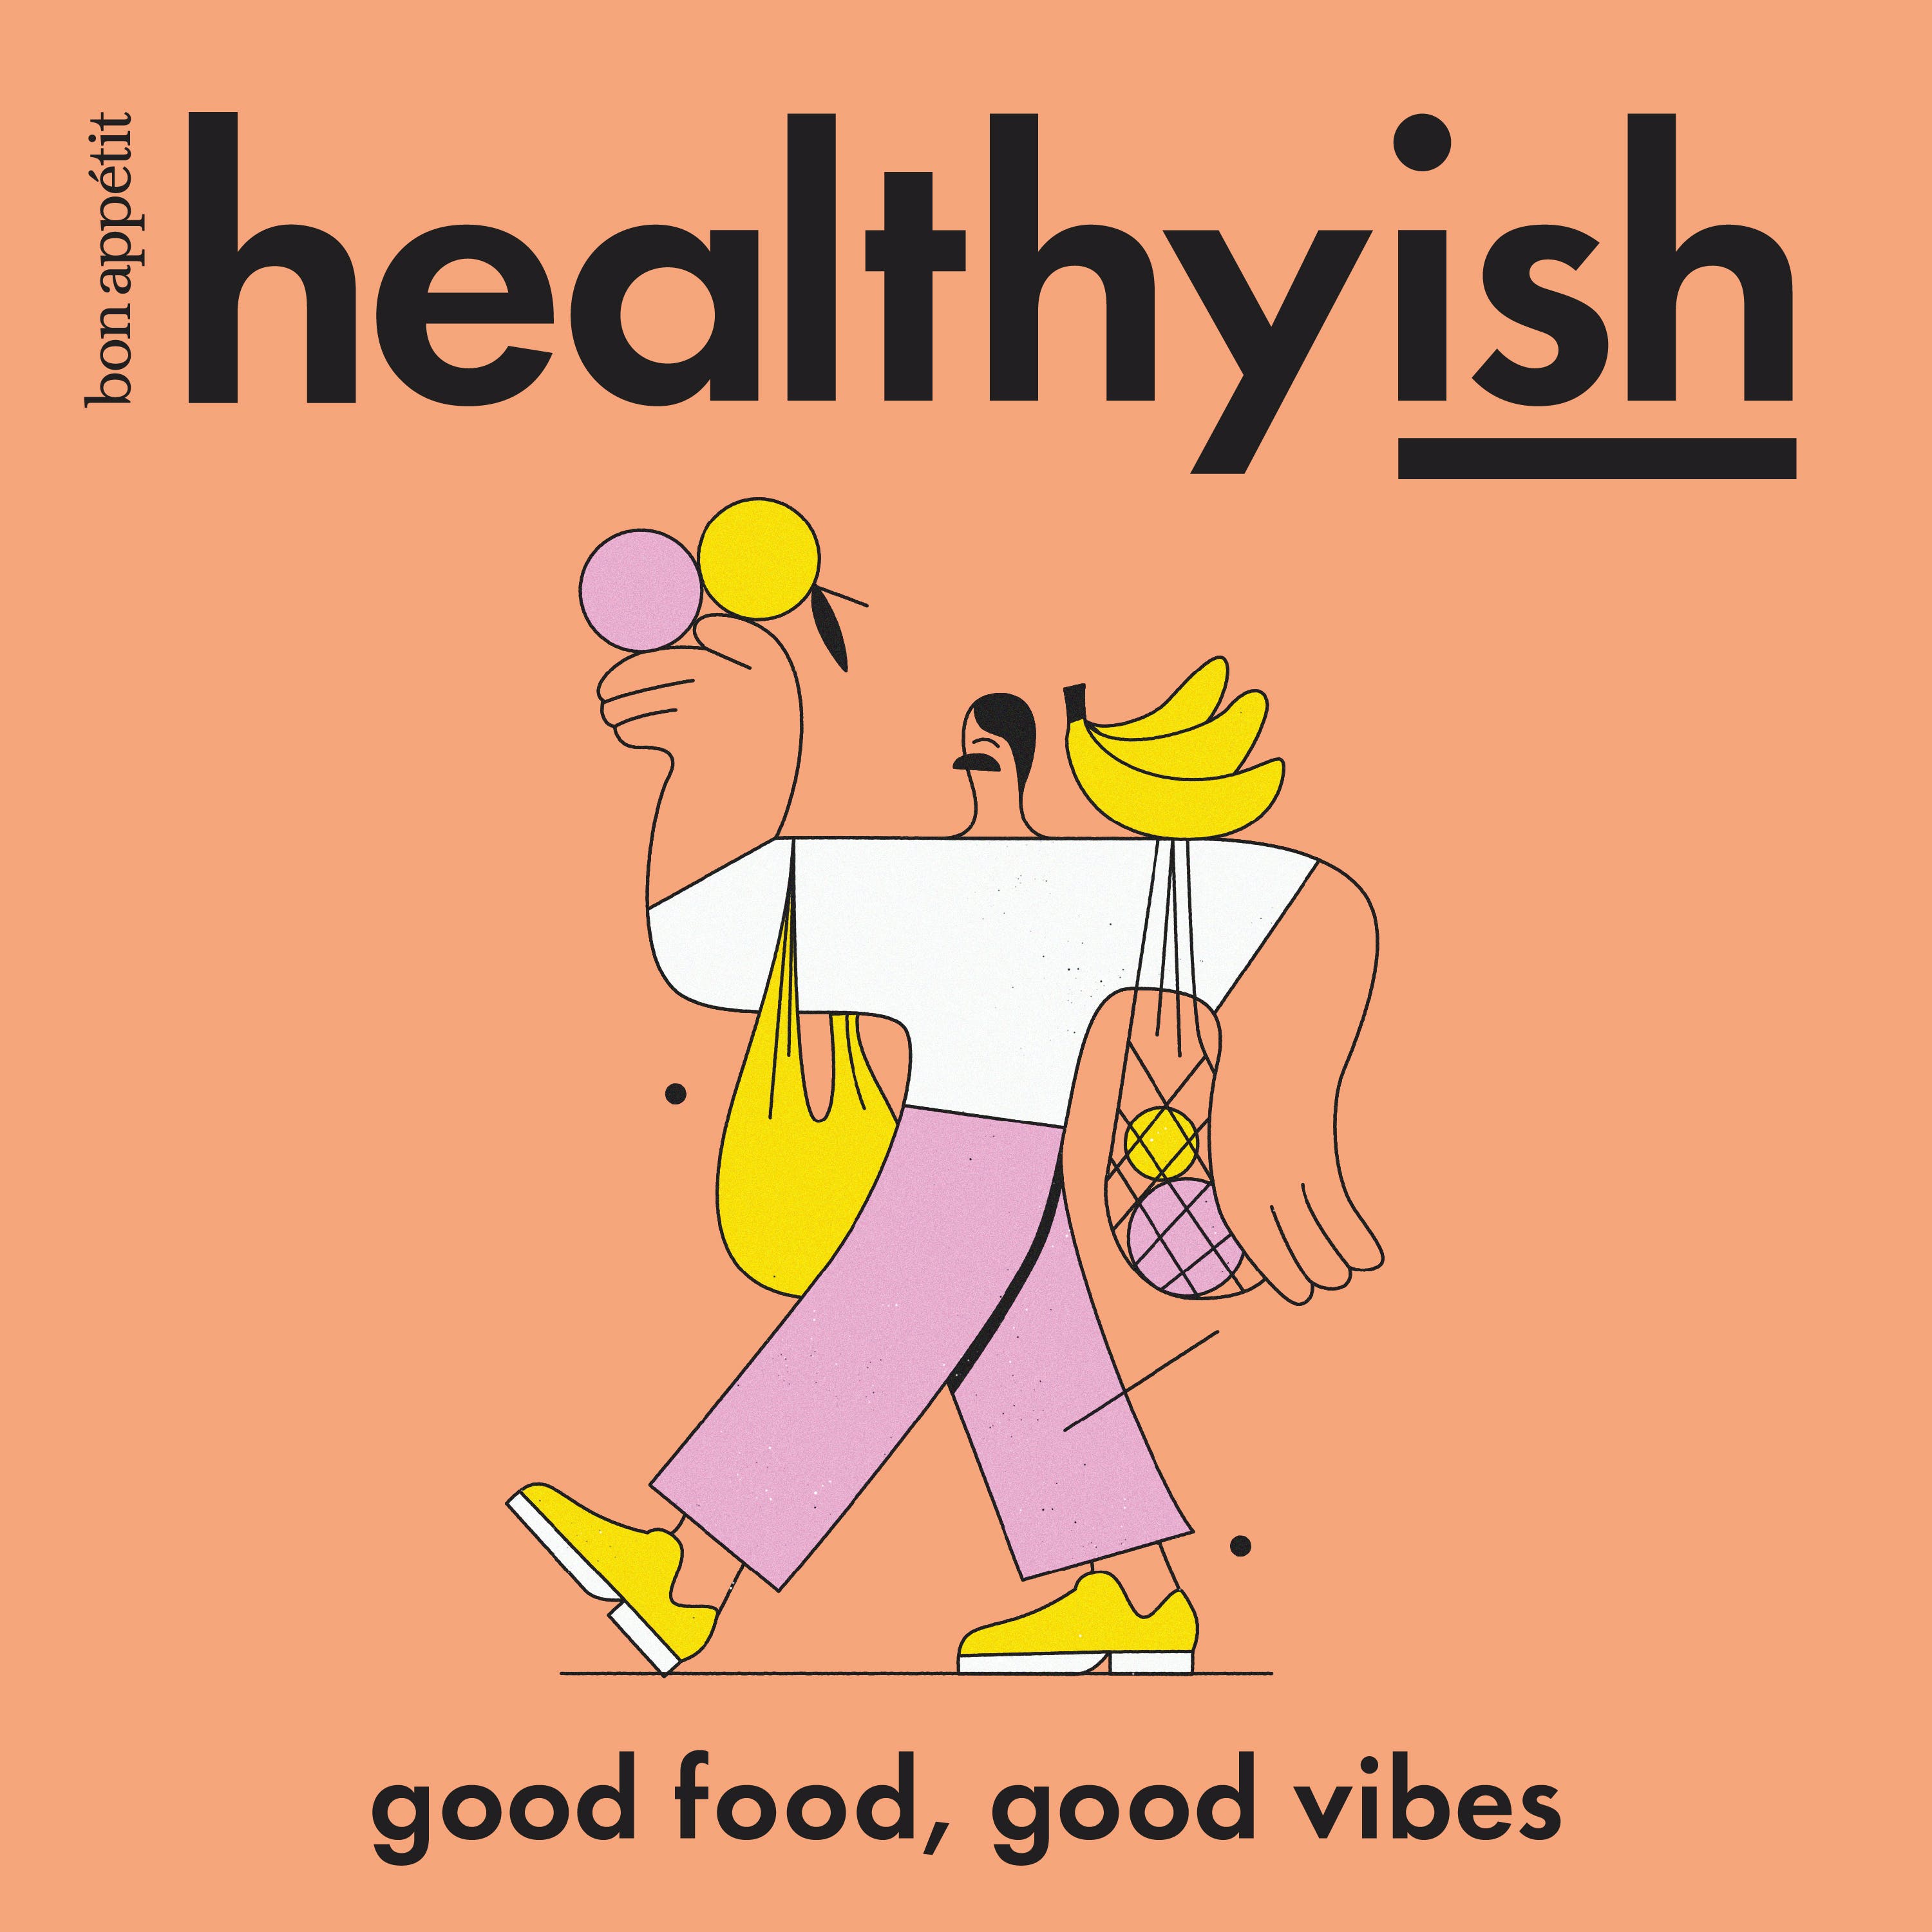 Thumbnail for "Introducing: Healthyish".